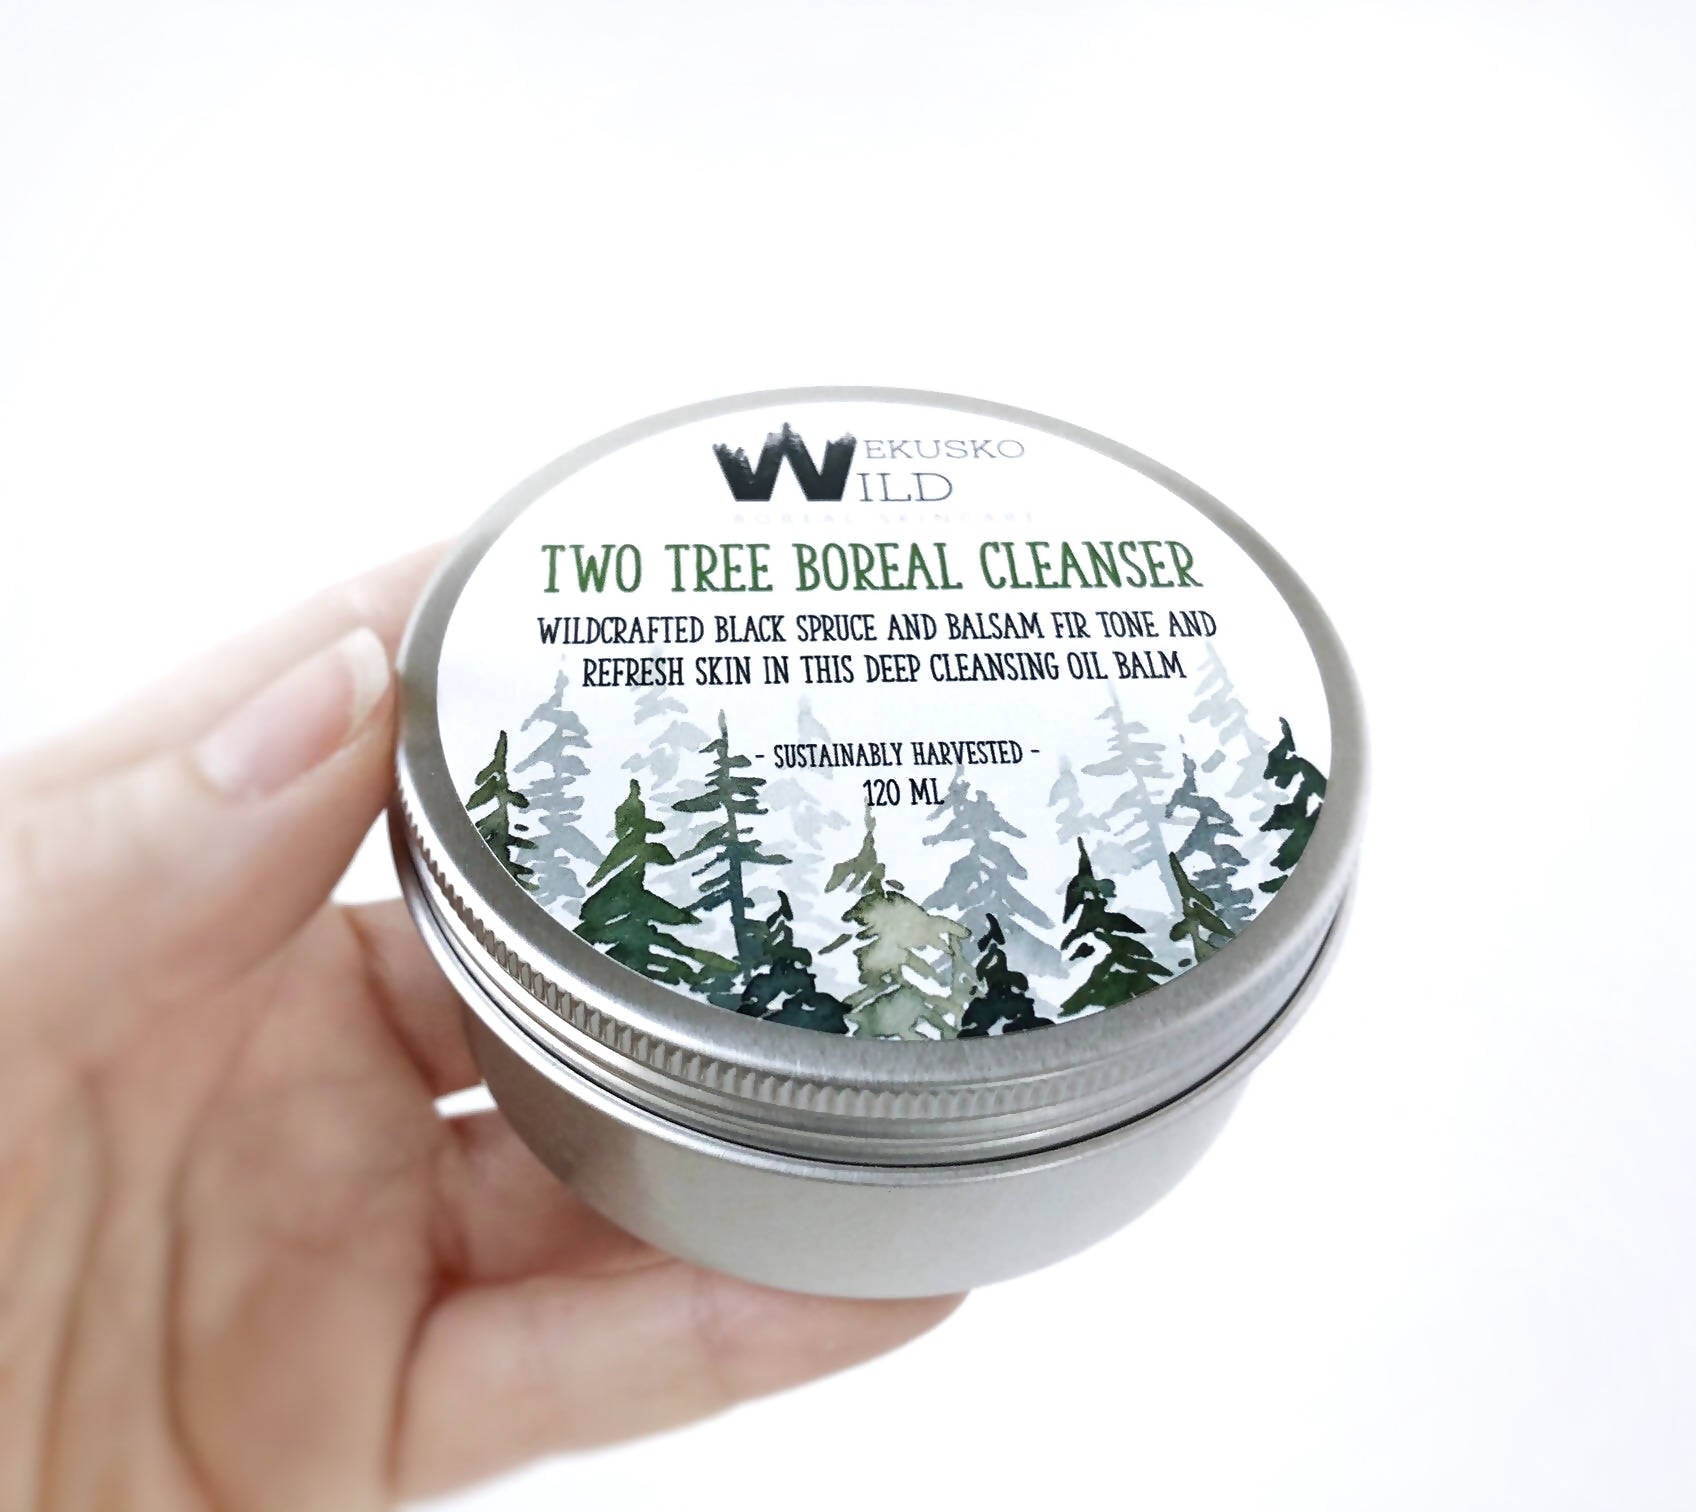 two tree boreal cleanser - WEKUSKO WILD Boreal Skincare